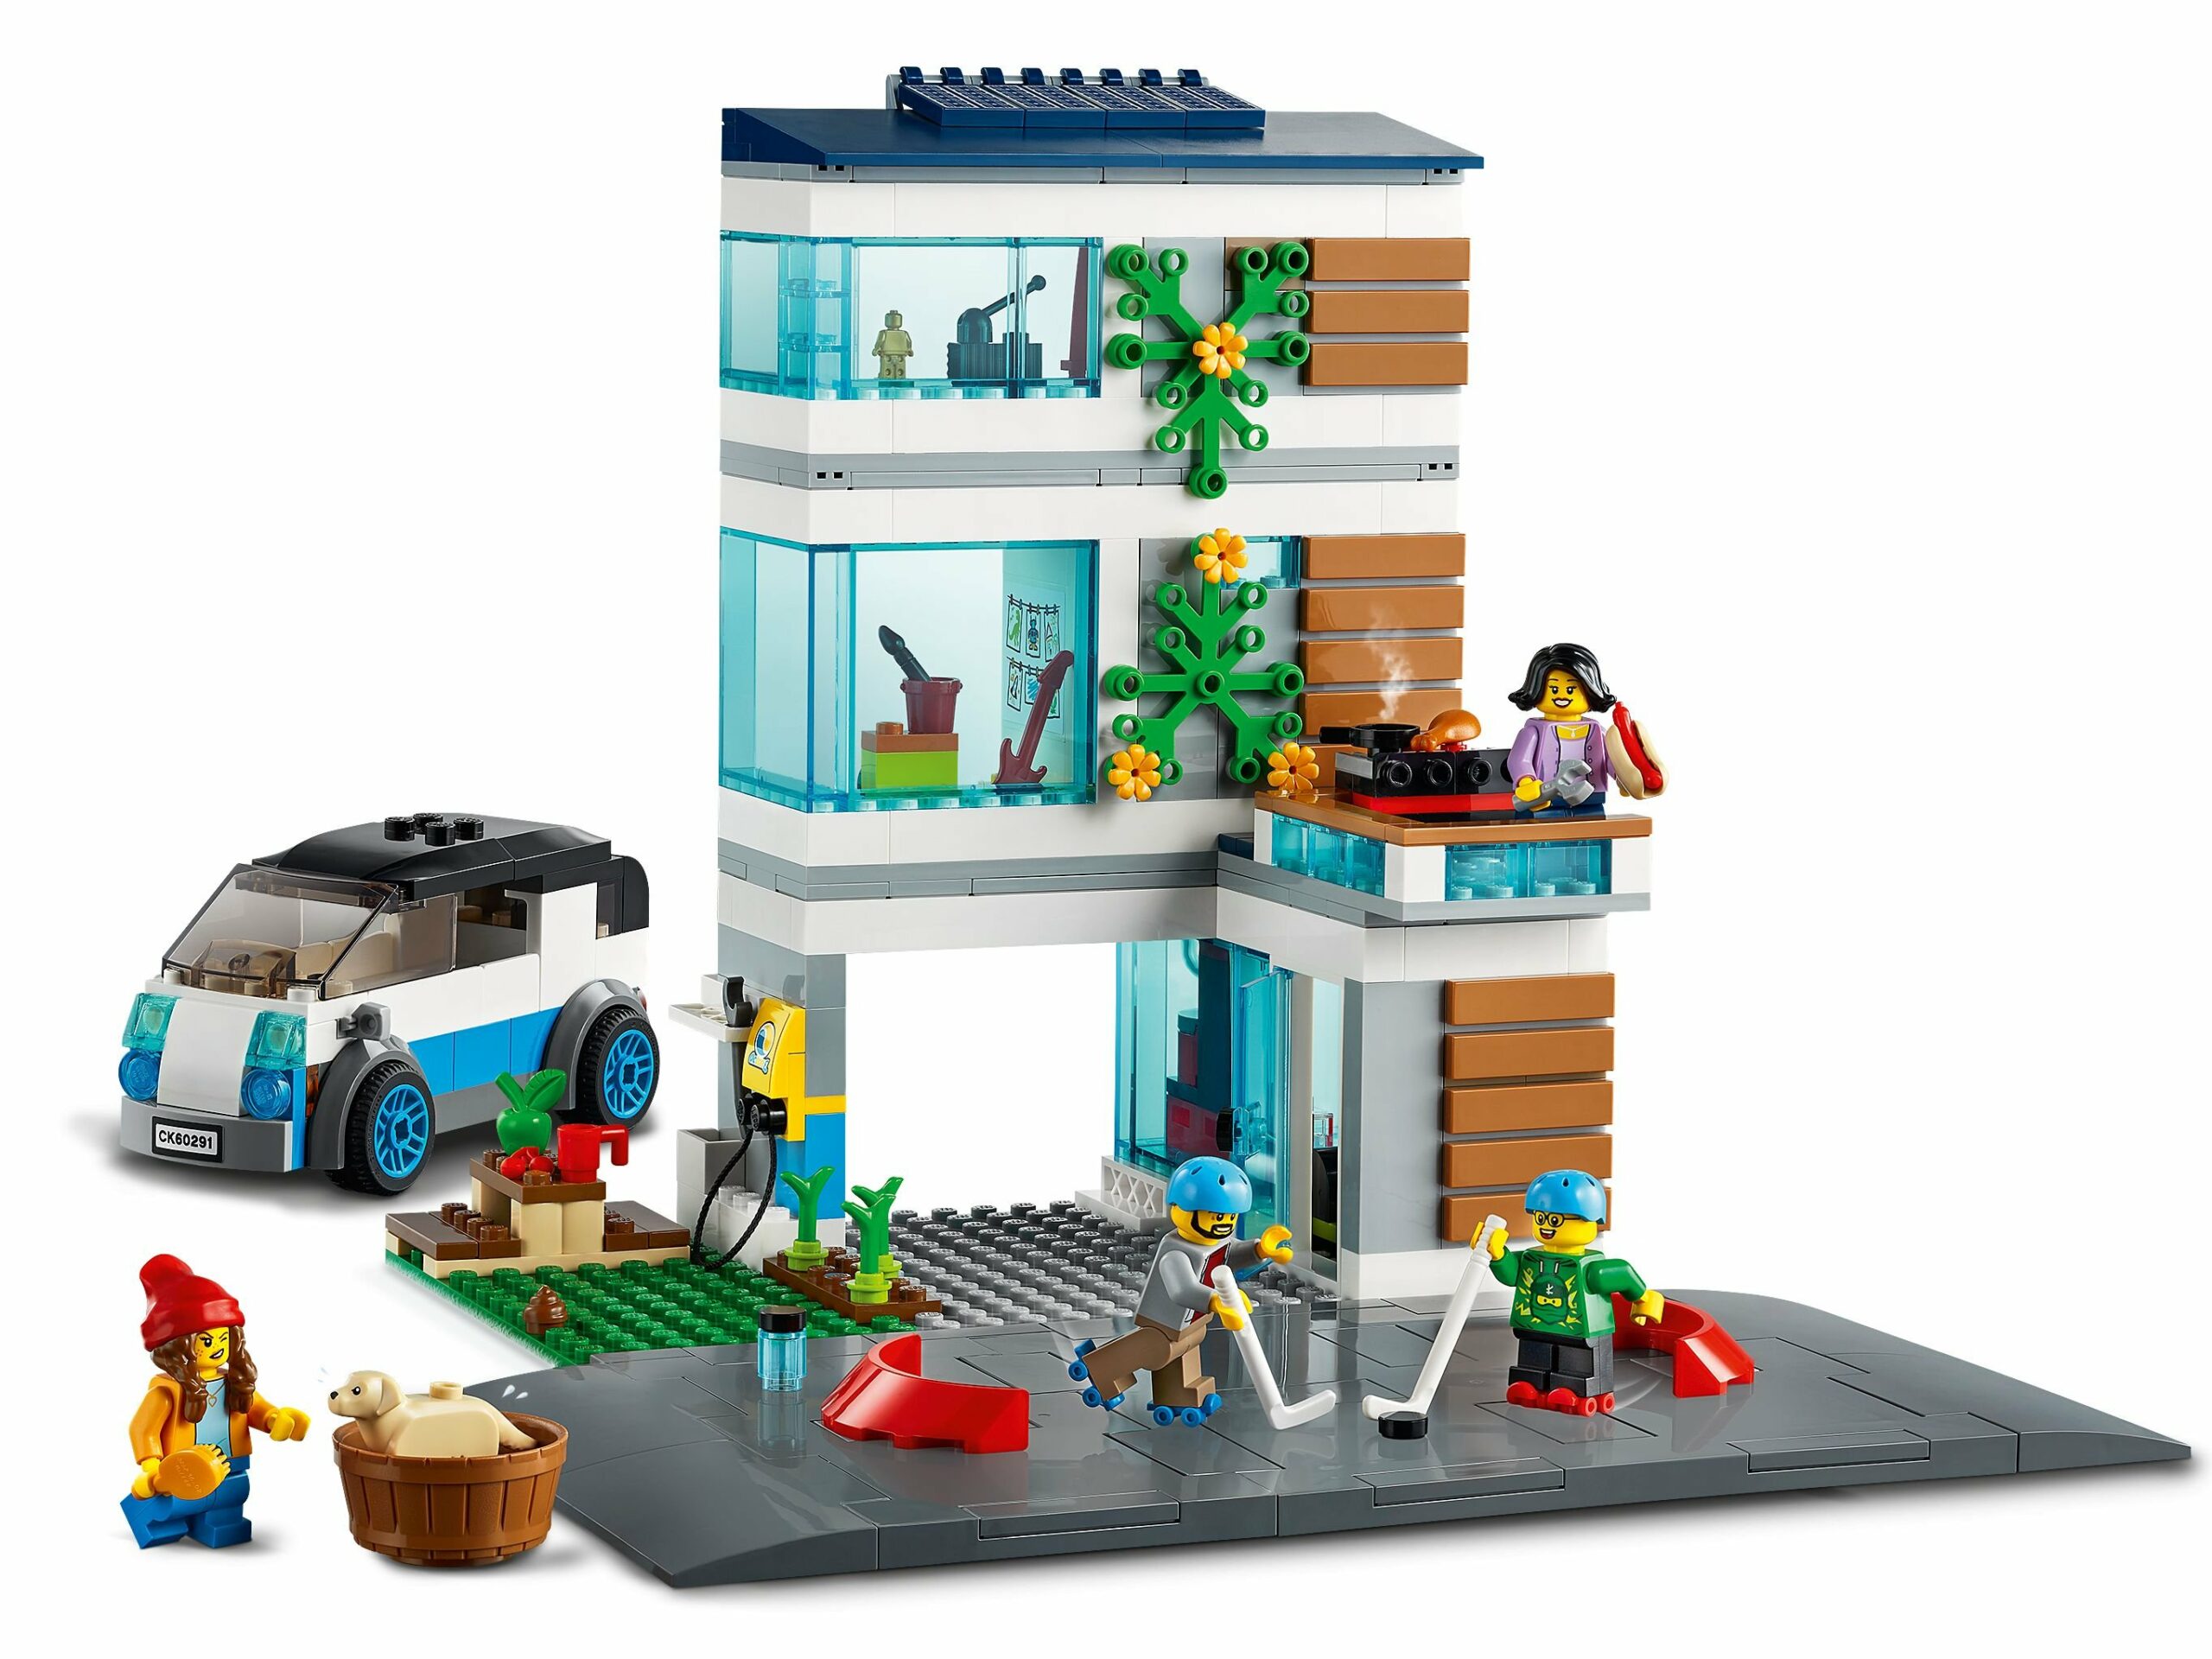 LEGO City - Modernes Familienhaus